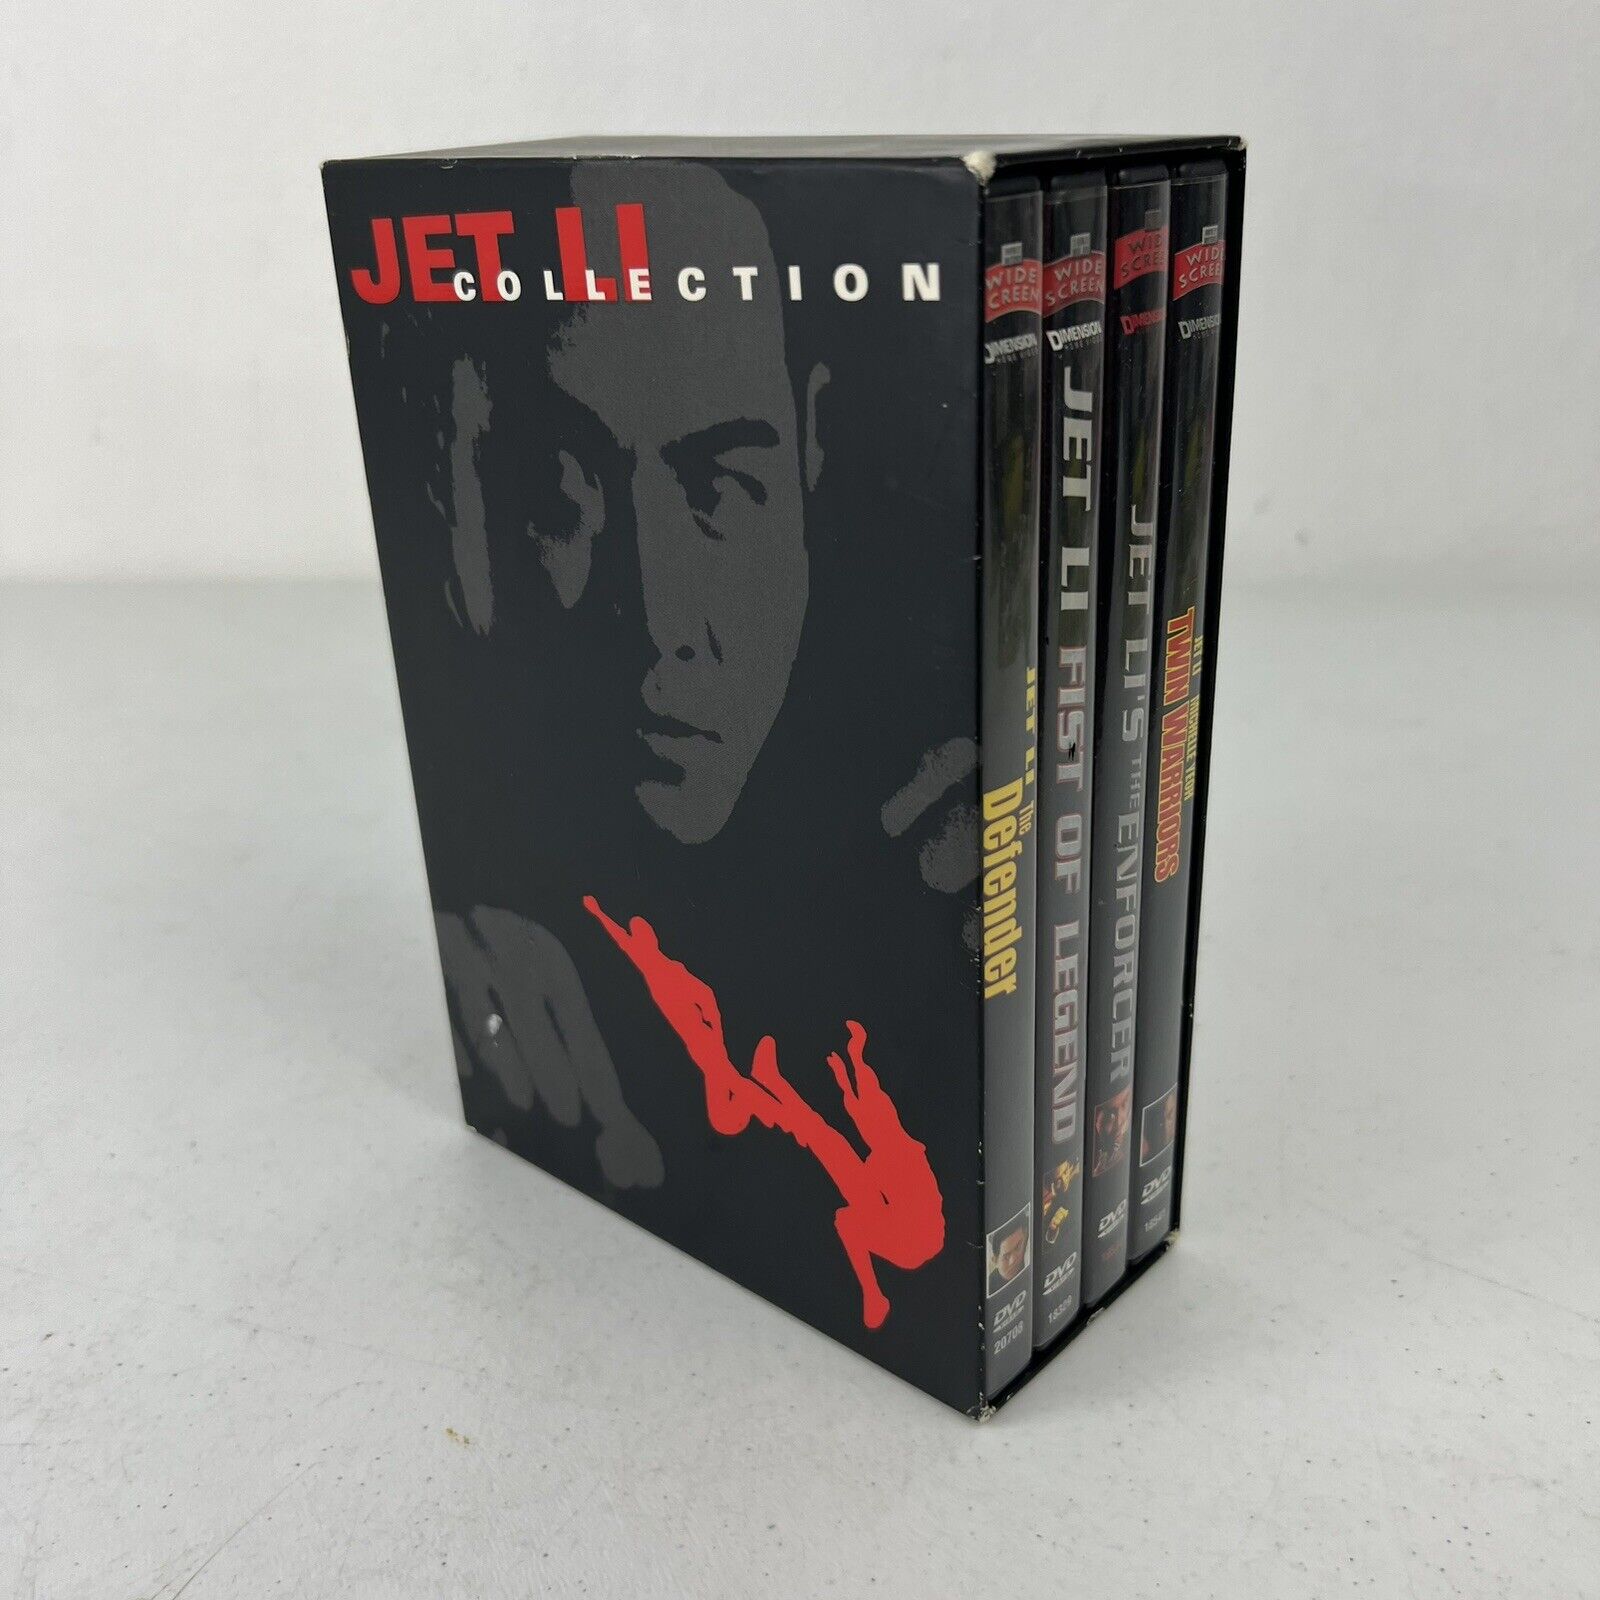 JET LI COLLECTION DVD BOX - new import